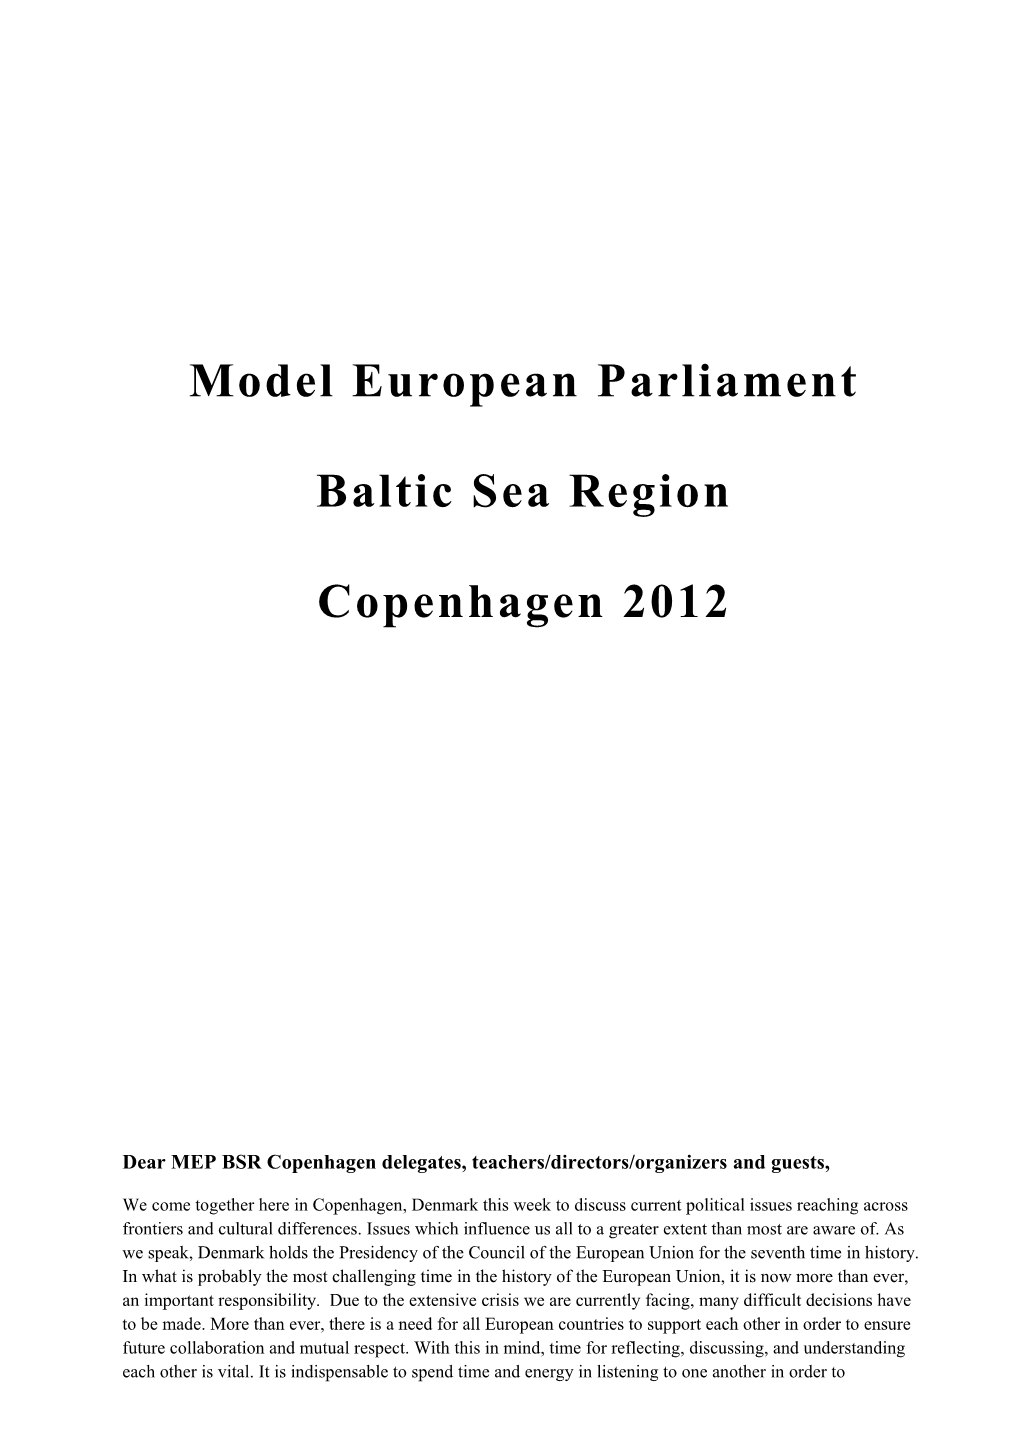 Dear MEP BSR Copenhagen Delegates, Teachers/Directors/Organizers and Guests